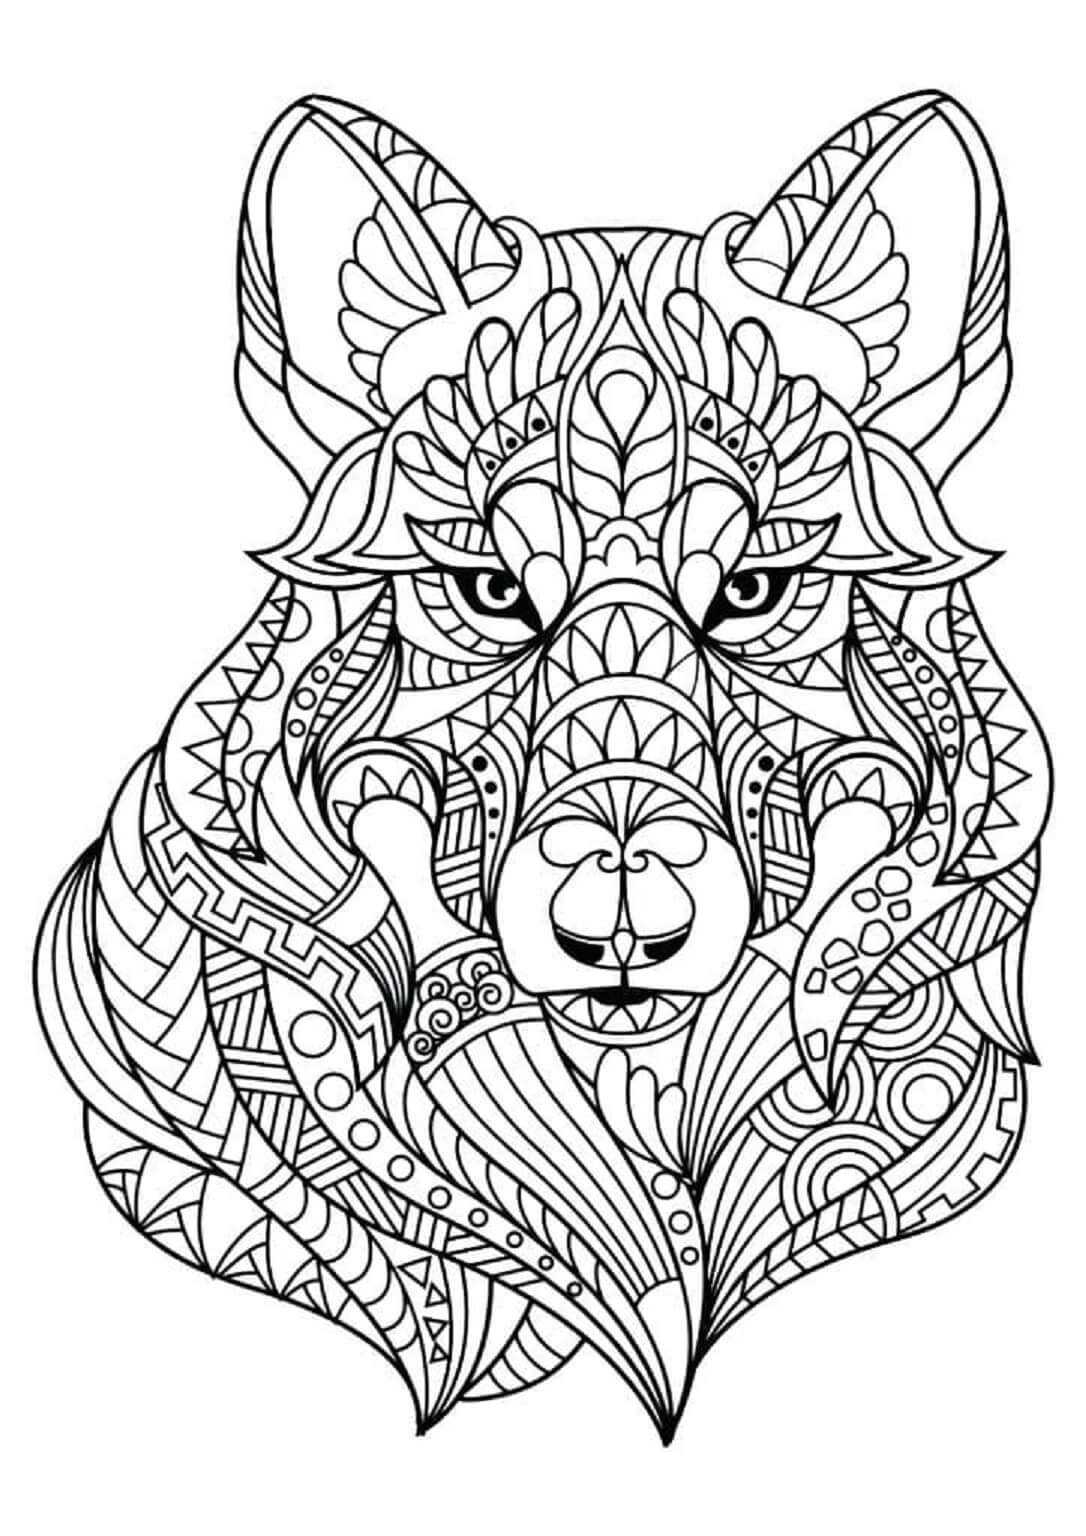 Mandala Wolf Face Coloring Page Mandalas